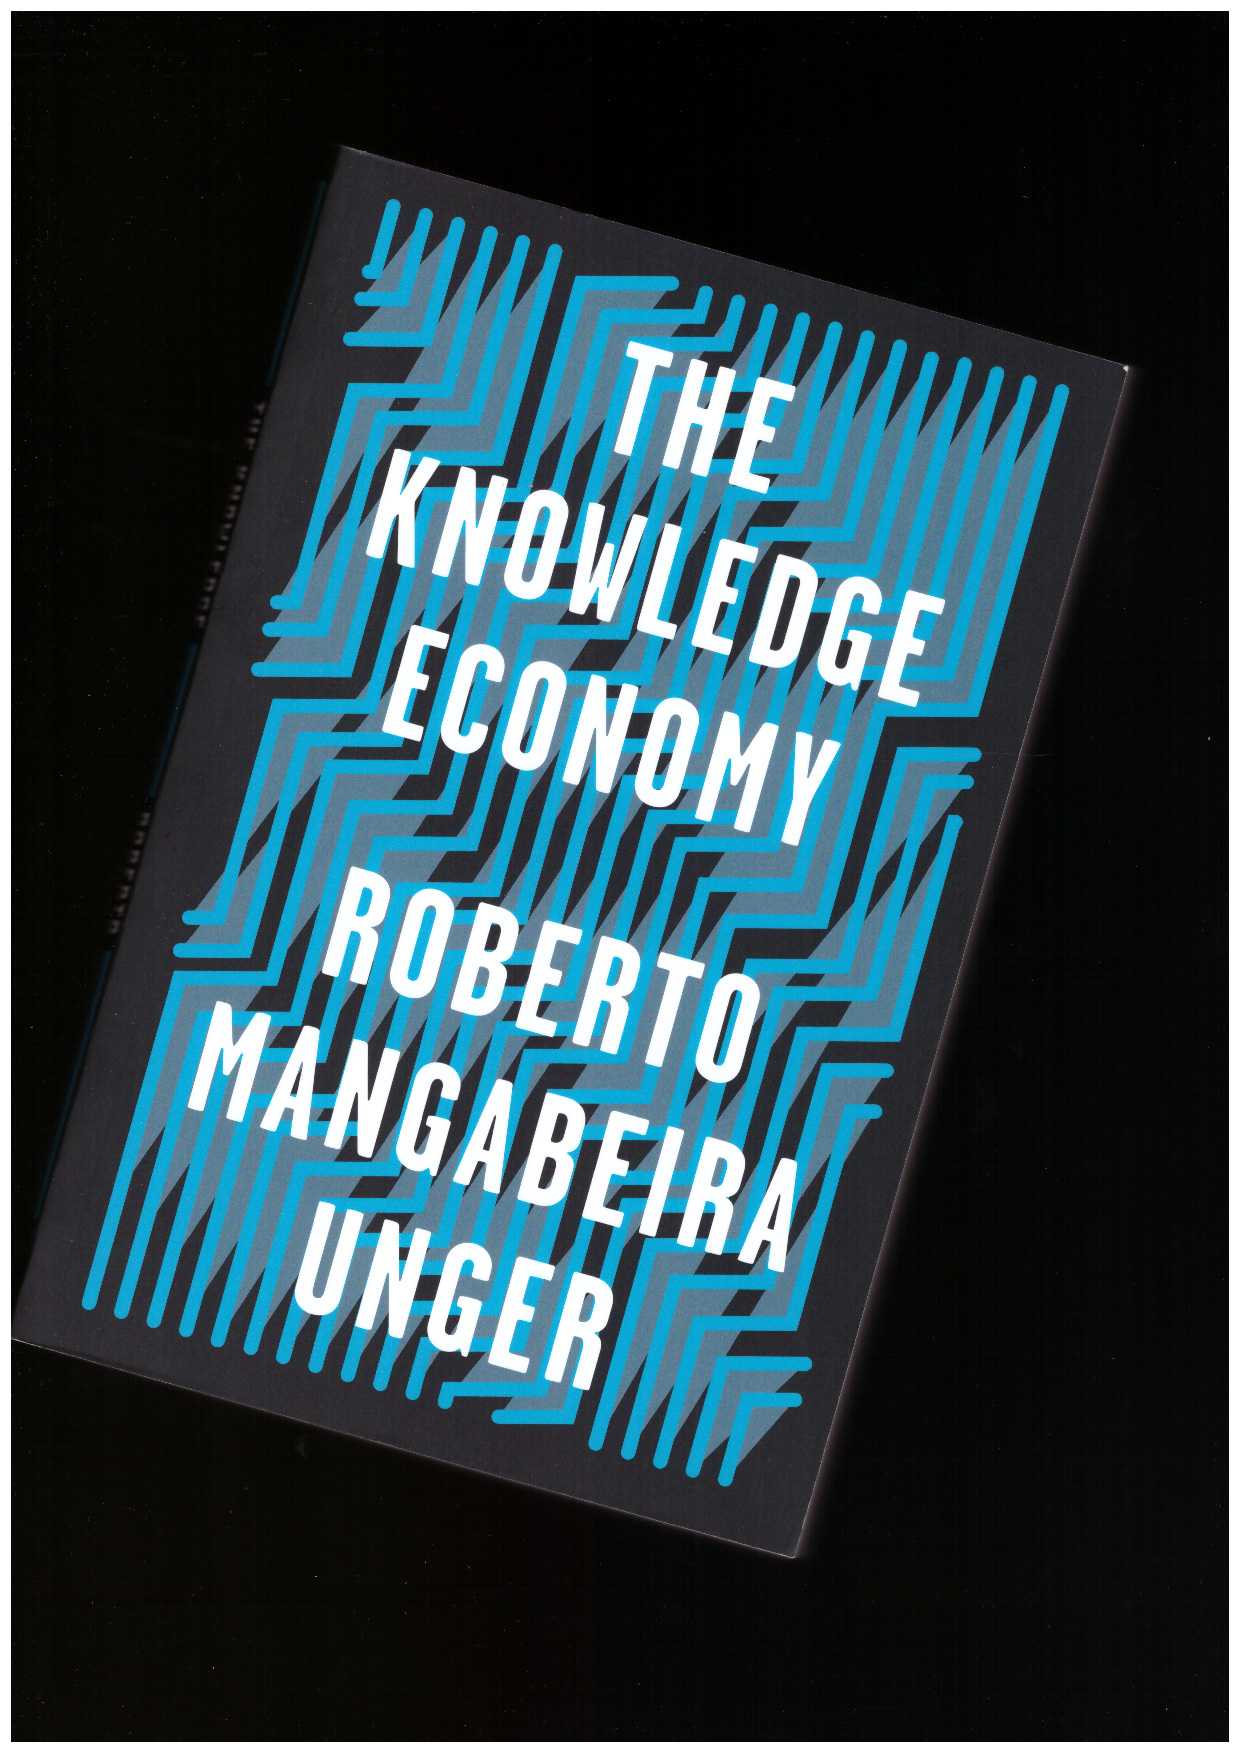 MANGABEIRA UNGER, Roberto - The Knowledge Economy